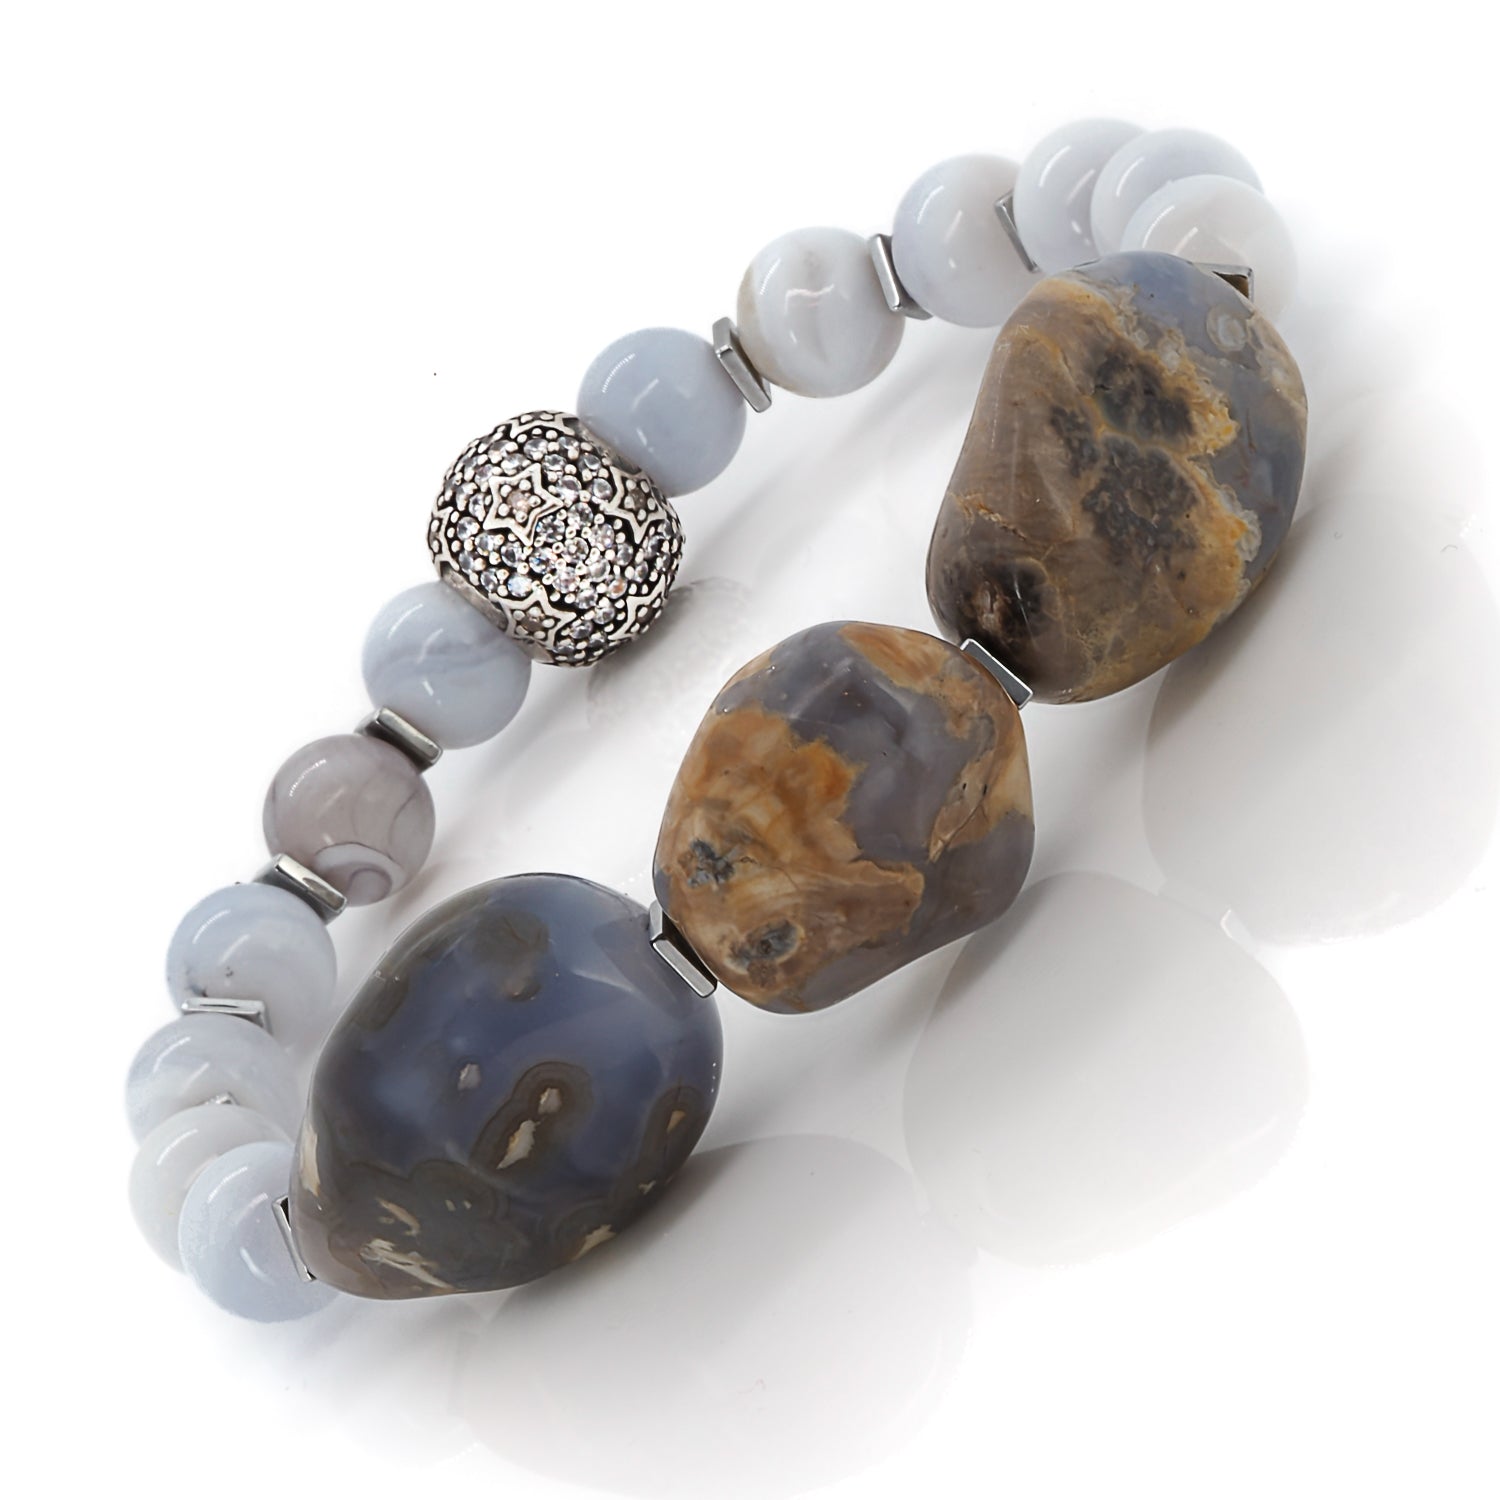 Celestial Silver Beads - Star Swarovski crystals illuminate the bracelet.